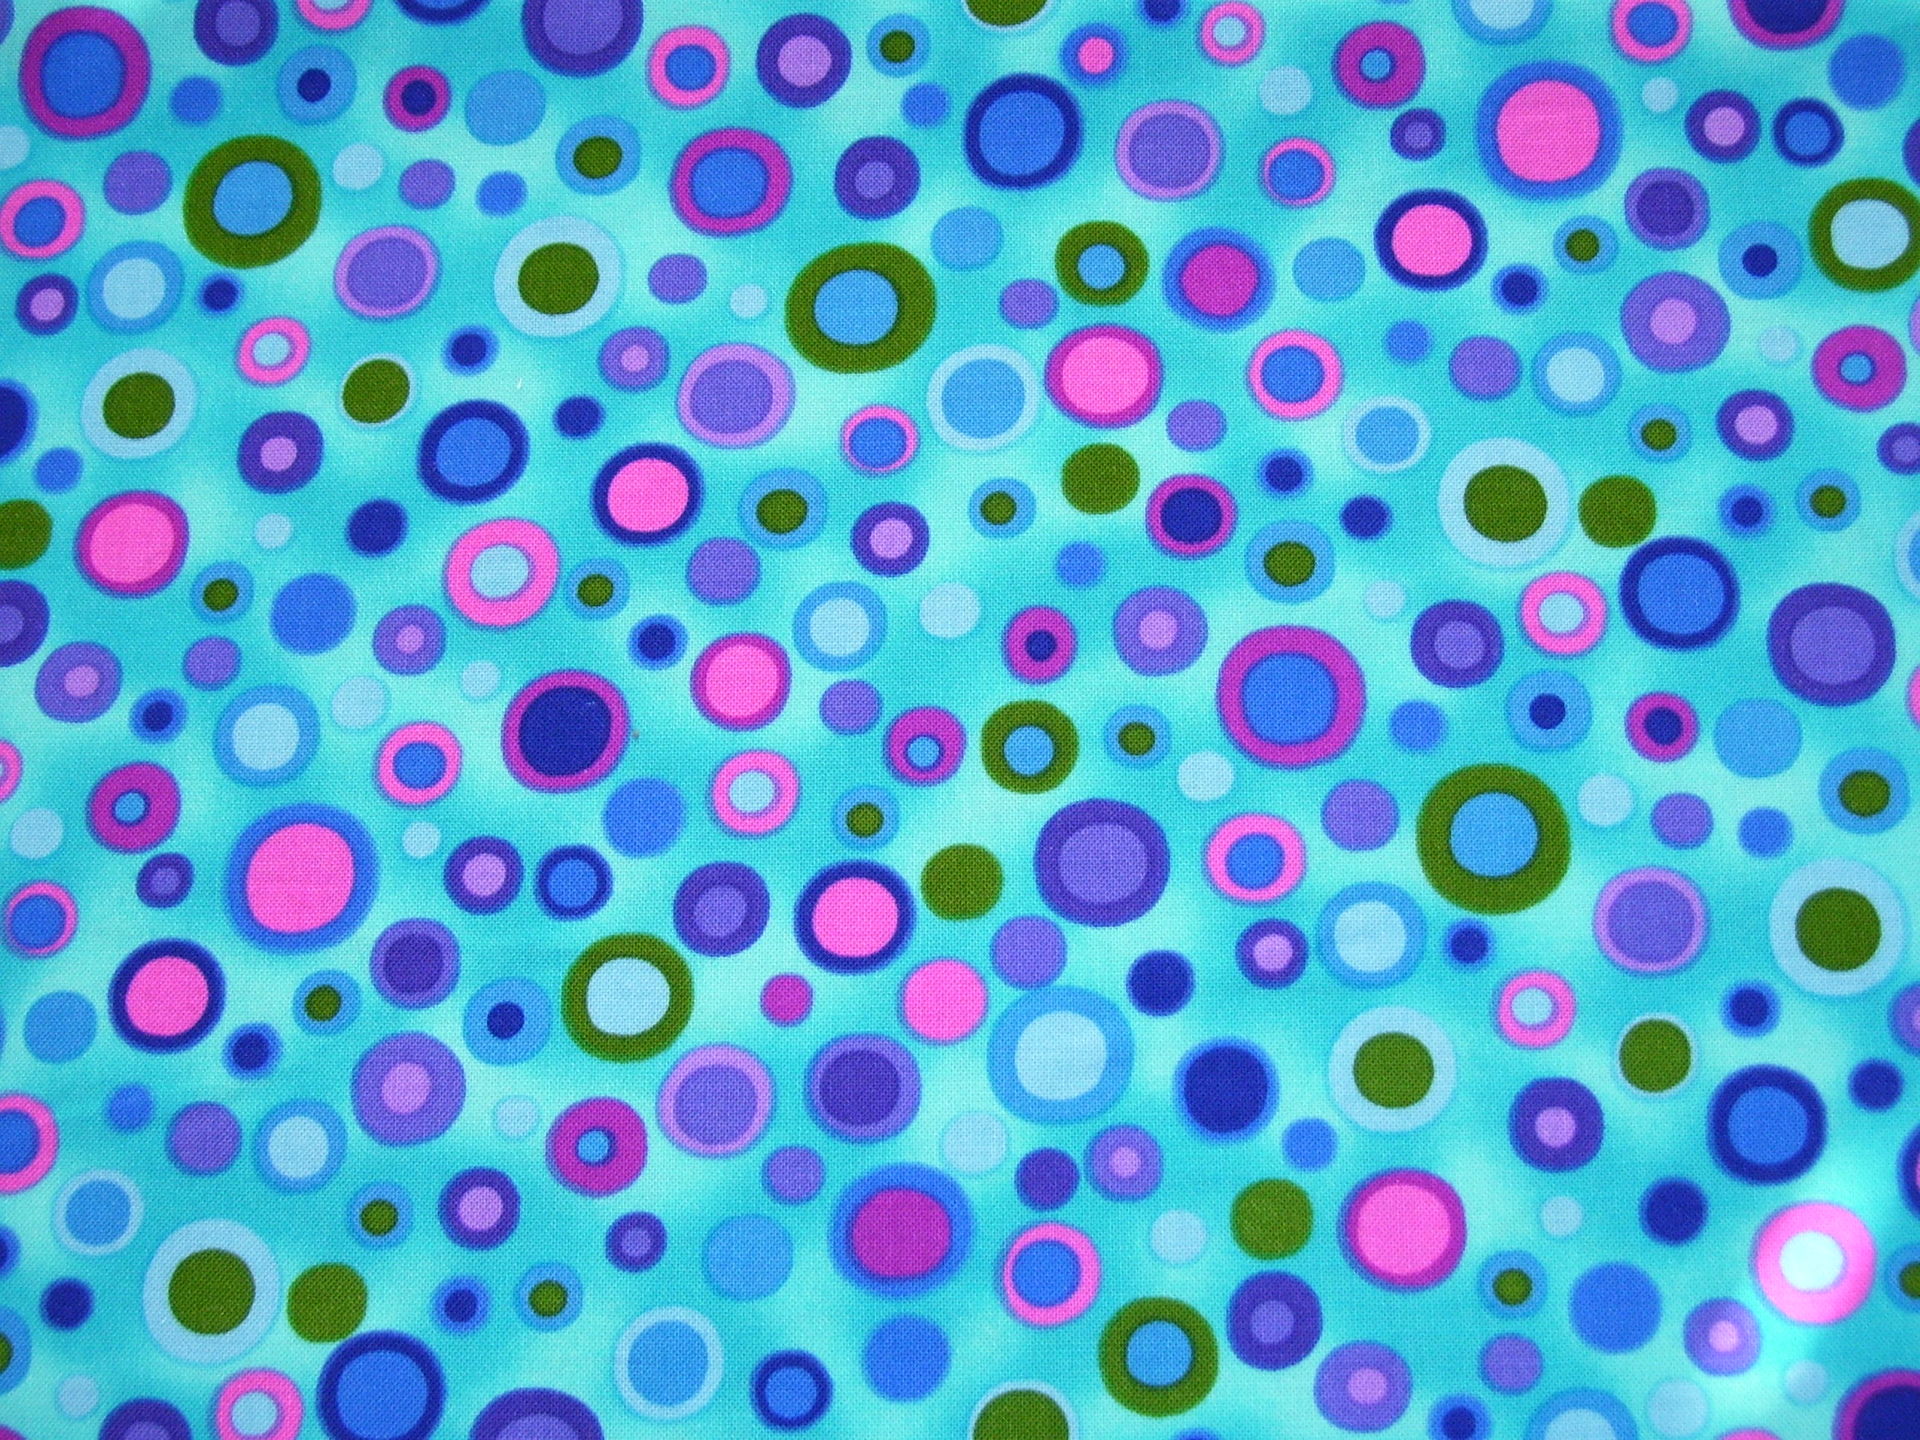 Polka Dot Backgrounds &amp; Patterns - Background Labs